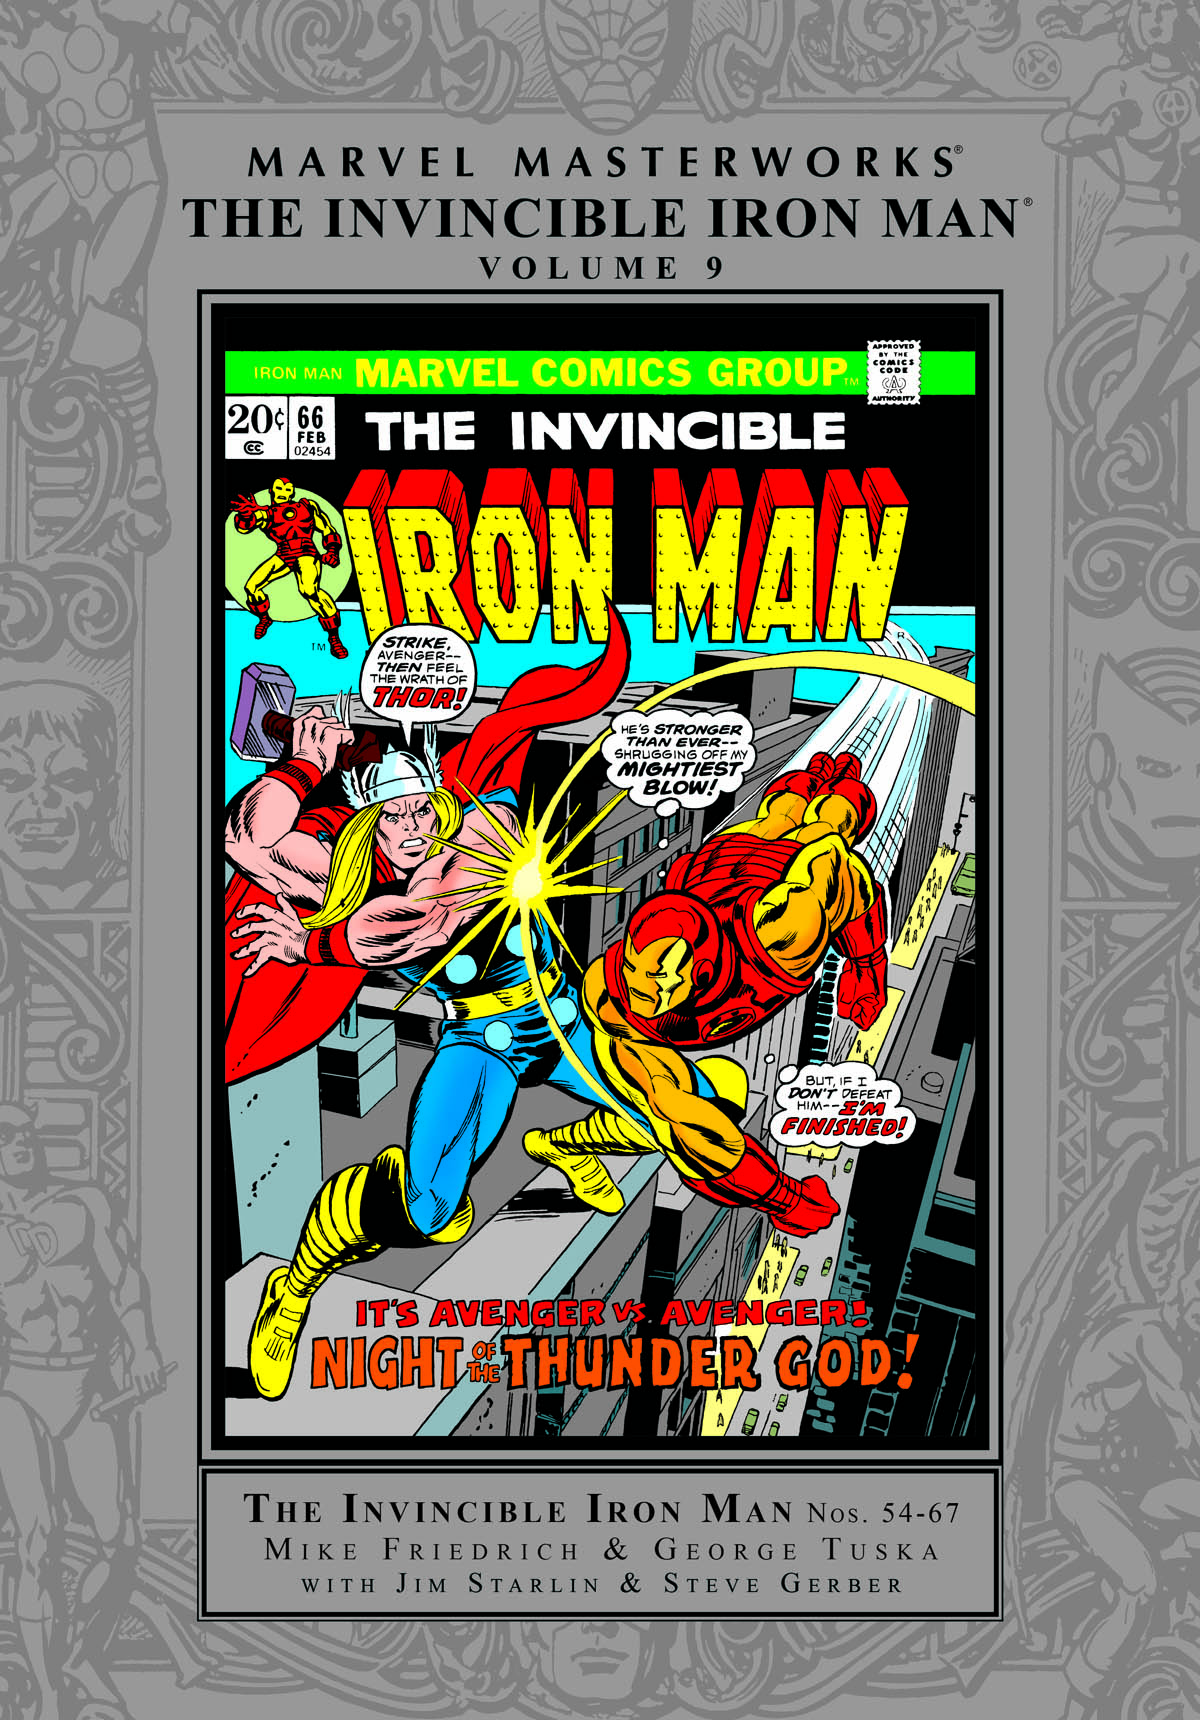 Marvel Masterworks: The Invincible Iron Man (Trade Paperback)